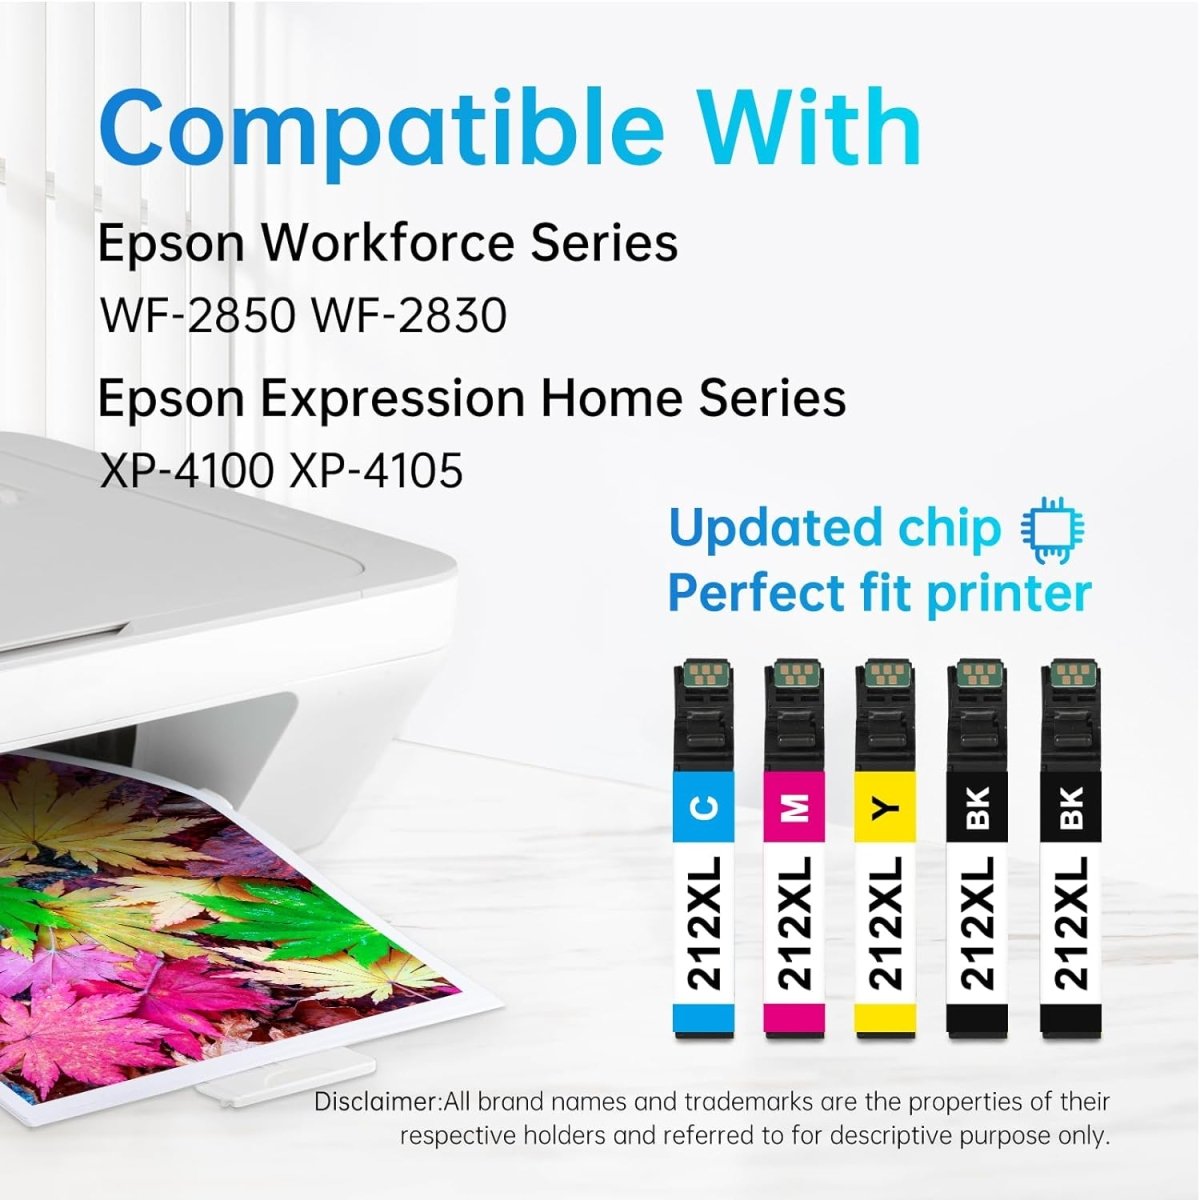 Remanufactured Epson 212 Ink Cartridges XL 5-Pack - High Capacity: 2 Black, 1 Cyan, 1 Magenta, 1 Yellow - Linford Office:Printer Ink & Toner Cartridge